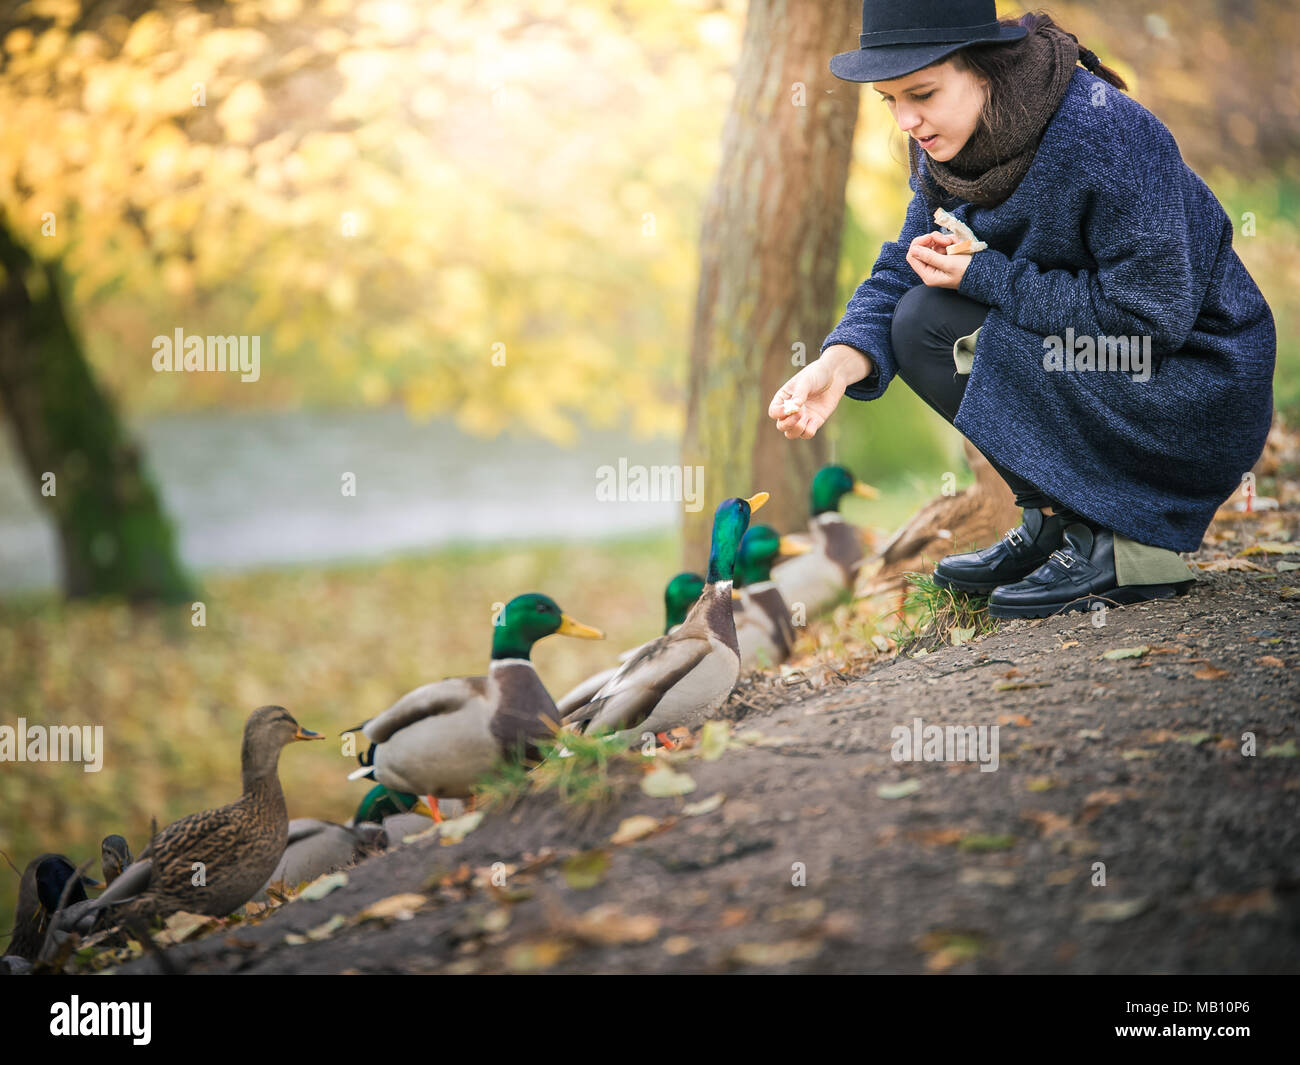 https://c8.alamy.com/comp/MB10P6/woman-with-hat-feeding-wild-ducks-MB10P6.jpg